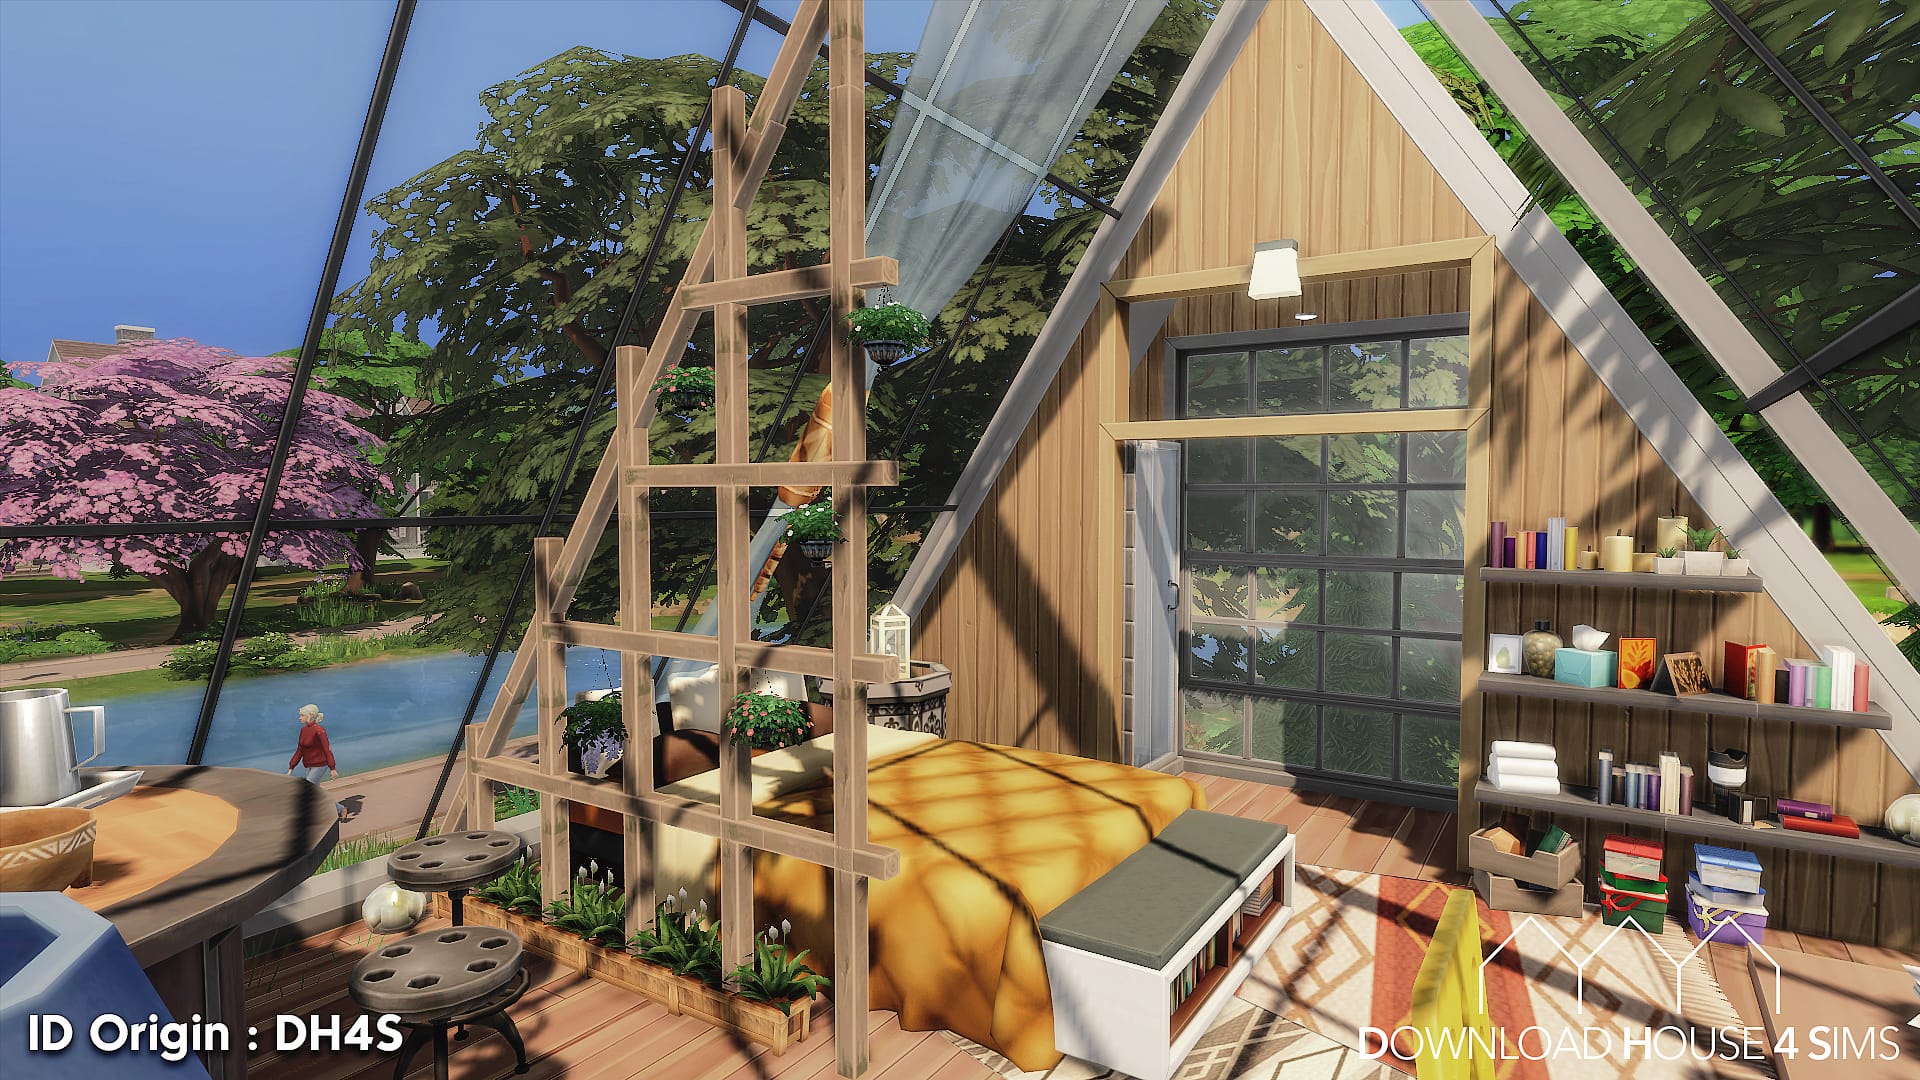 A Frame Eco Tiny Home Maisons Download House 4 Sims